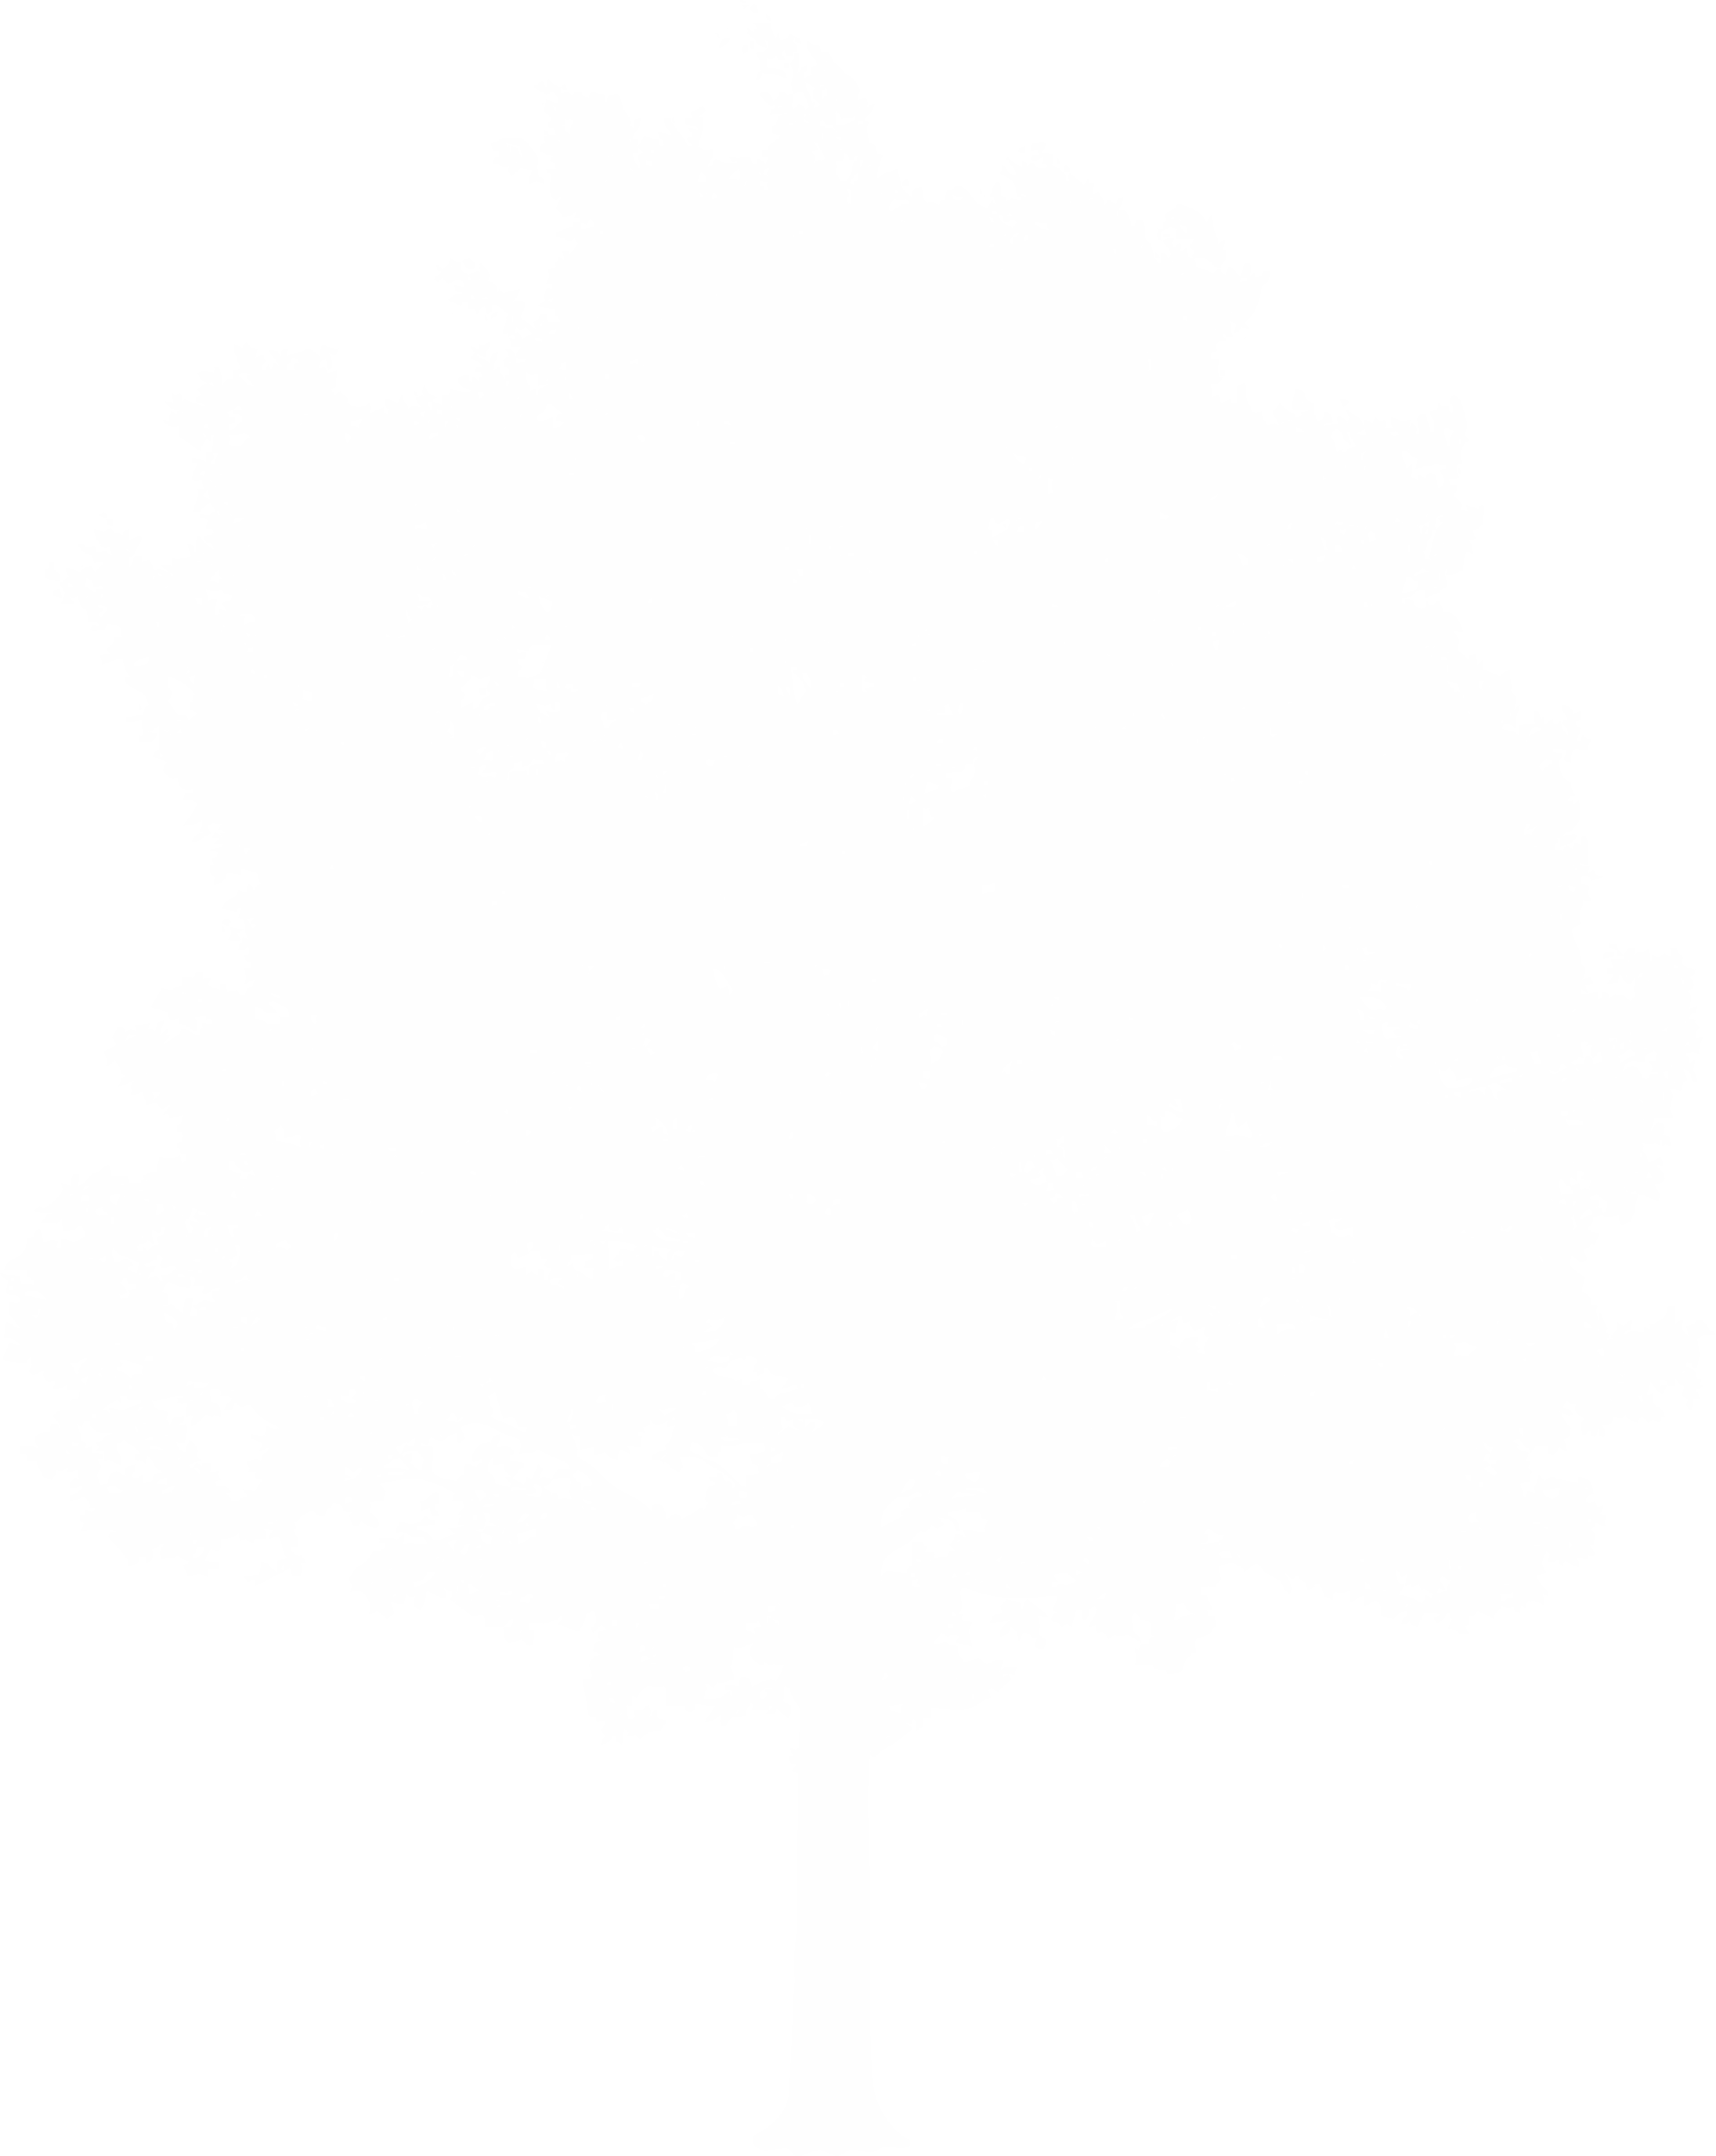 Tree - Pashtunkhwa milli awami party electoral symbol